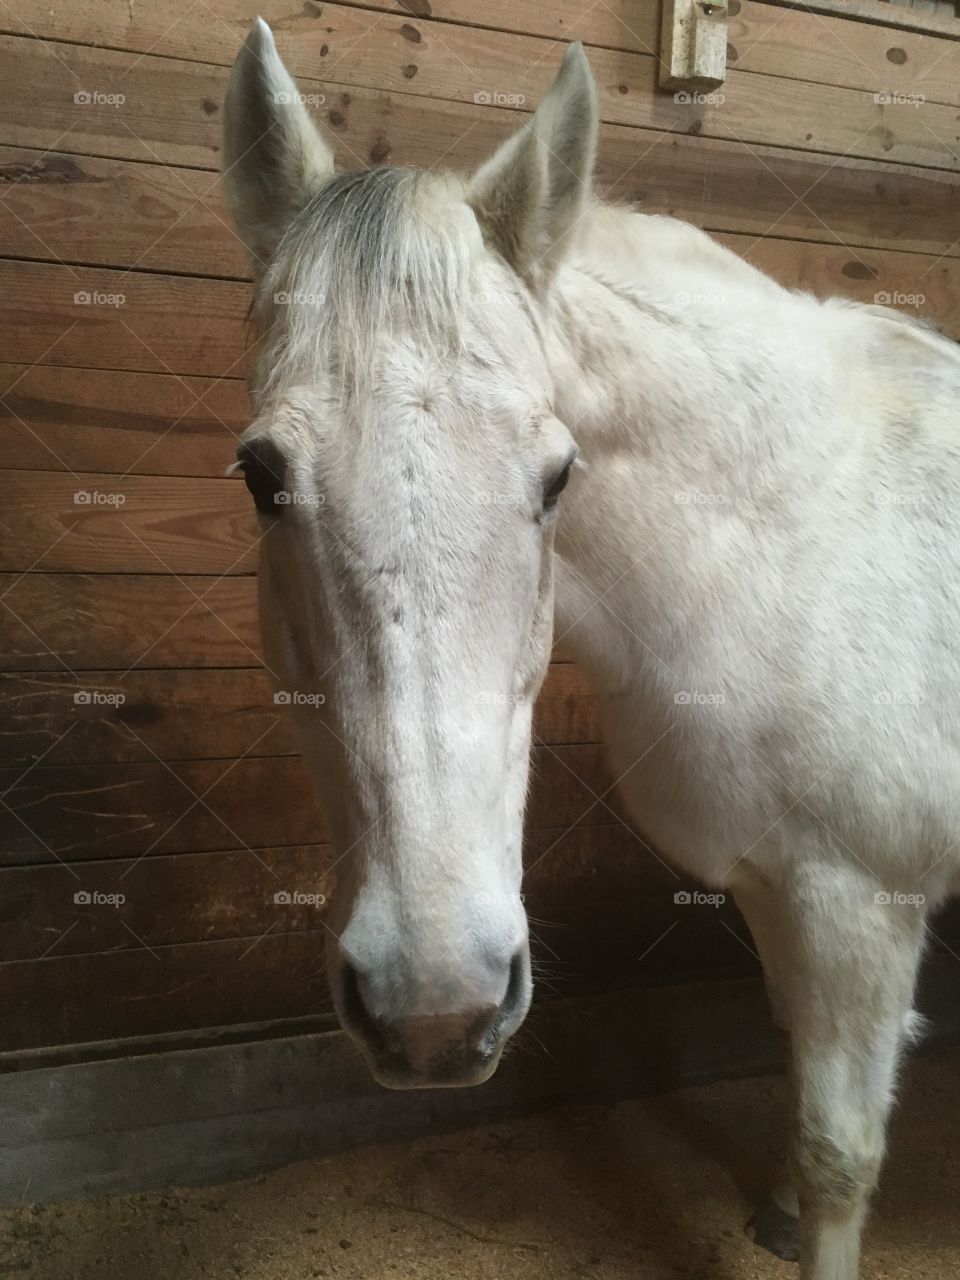 Lyrik, a thoroughbred gelding, watching me in his stall as I prepared to brush him. 